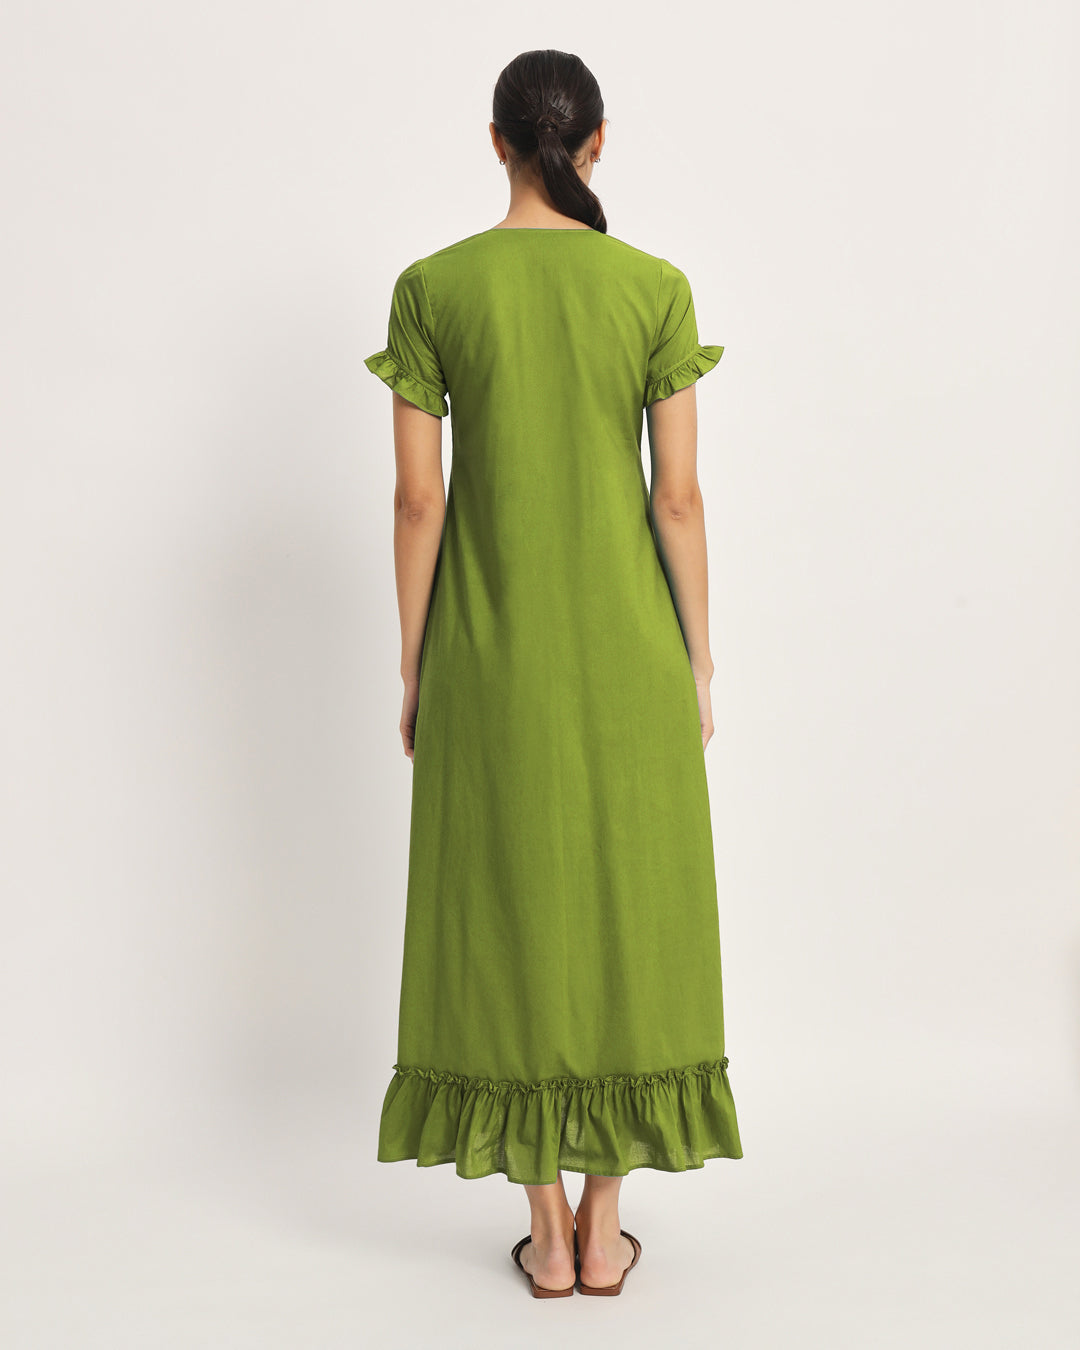 Combo: Black & Sage Green Bumpin' & Stylin' Maternity & Nursing Dress - Set of 2